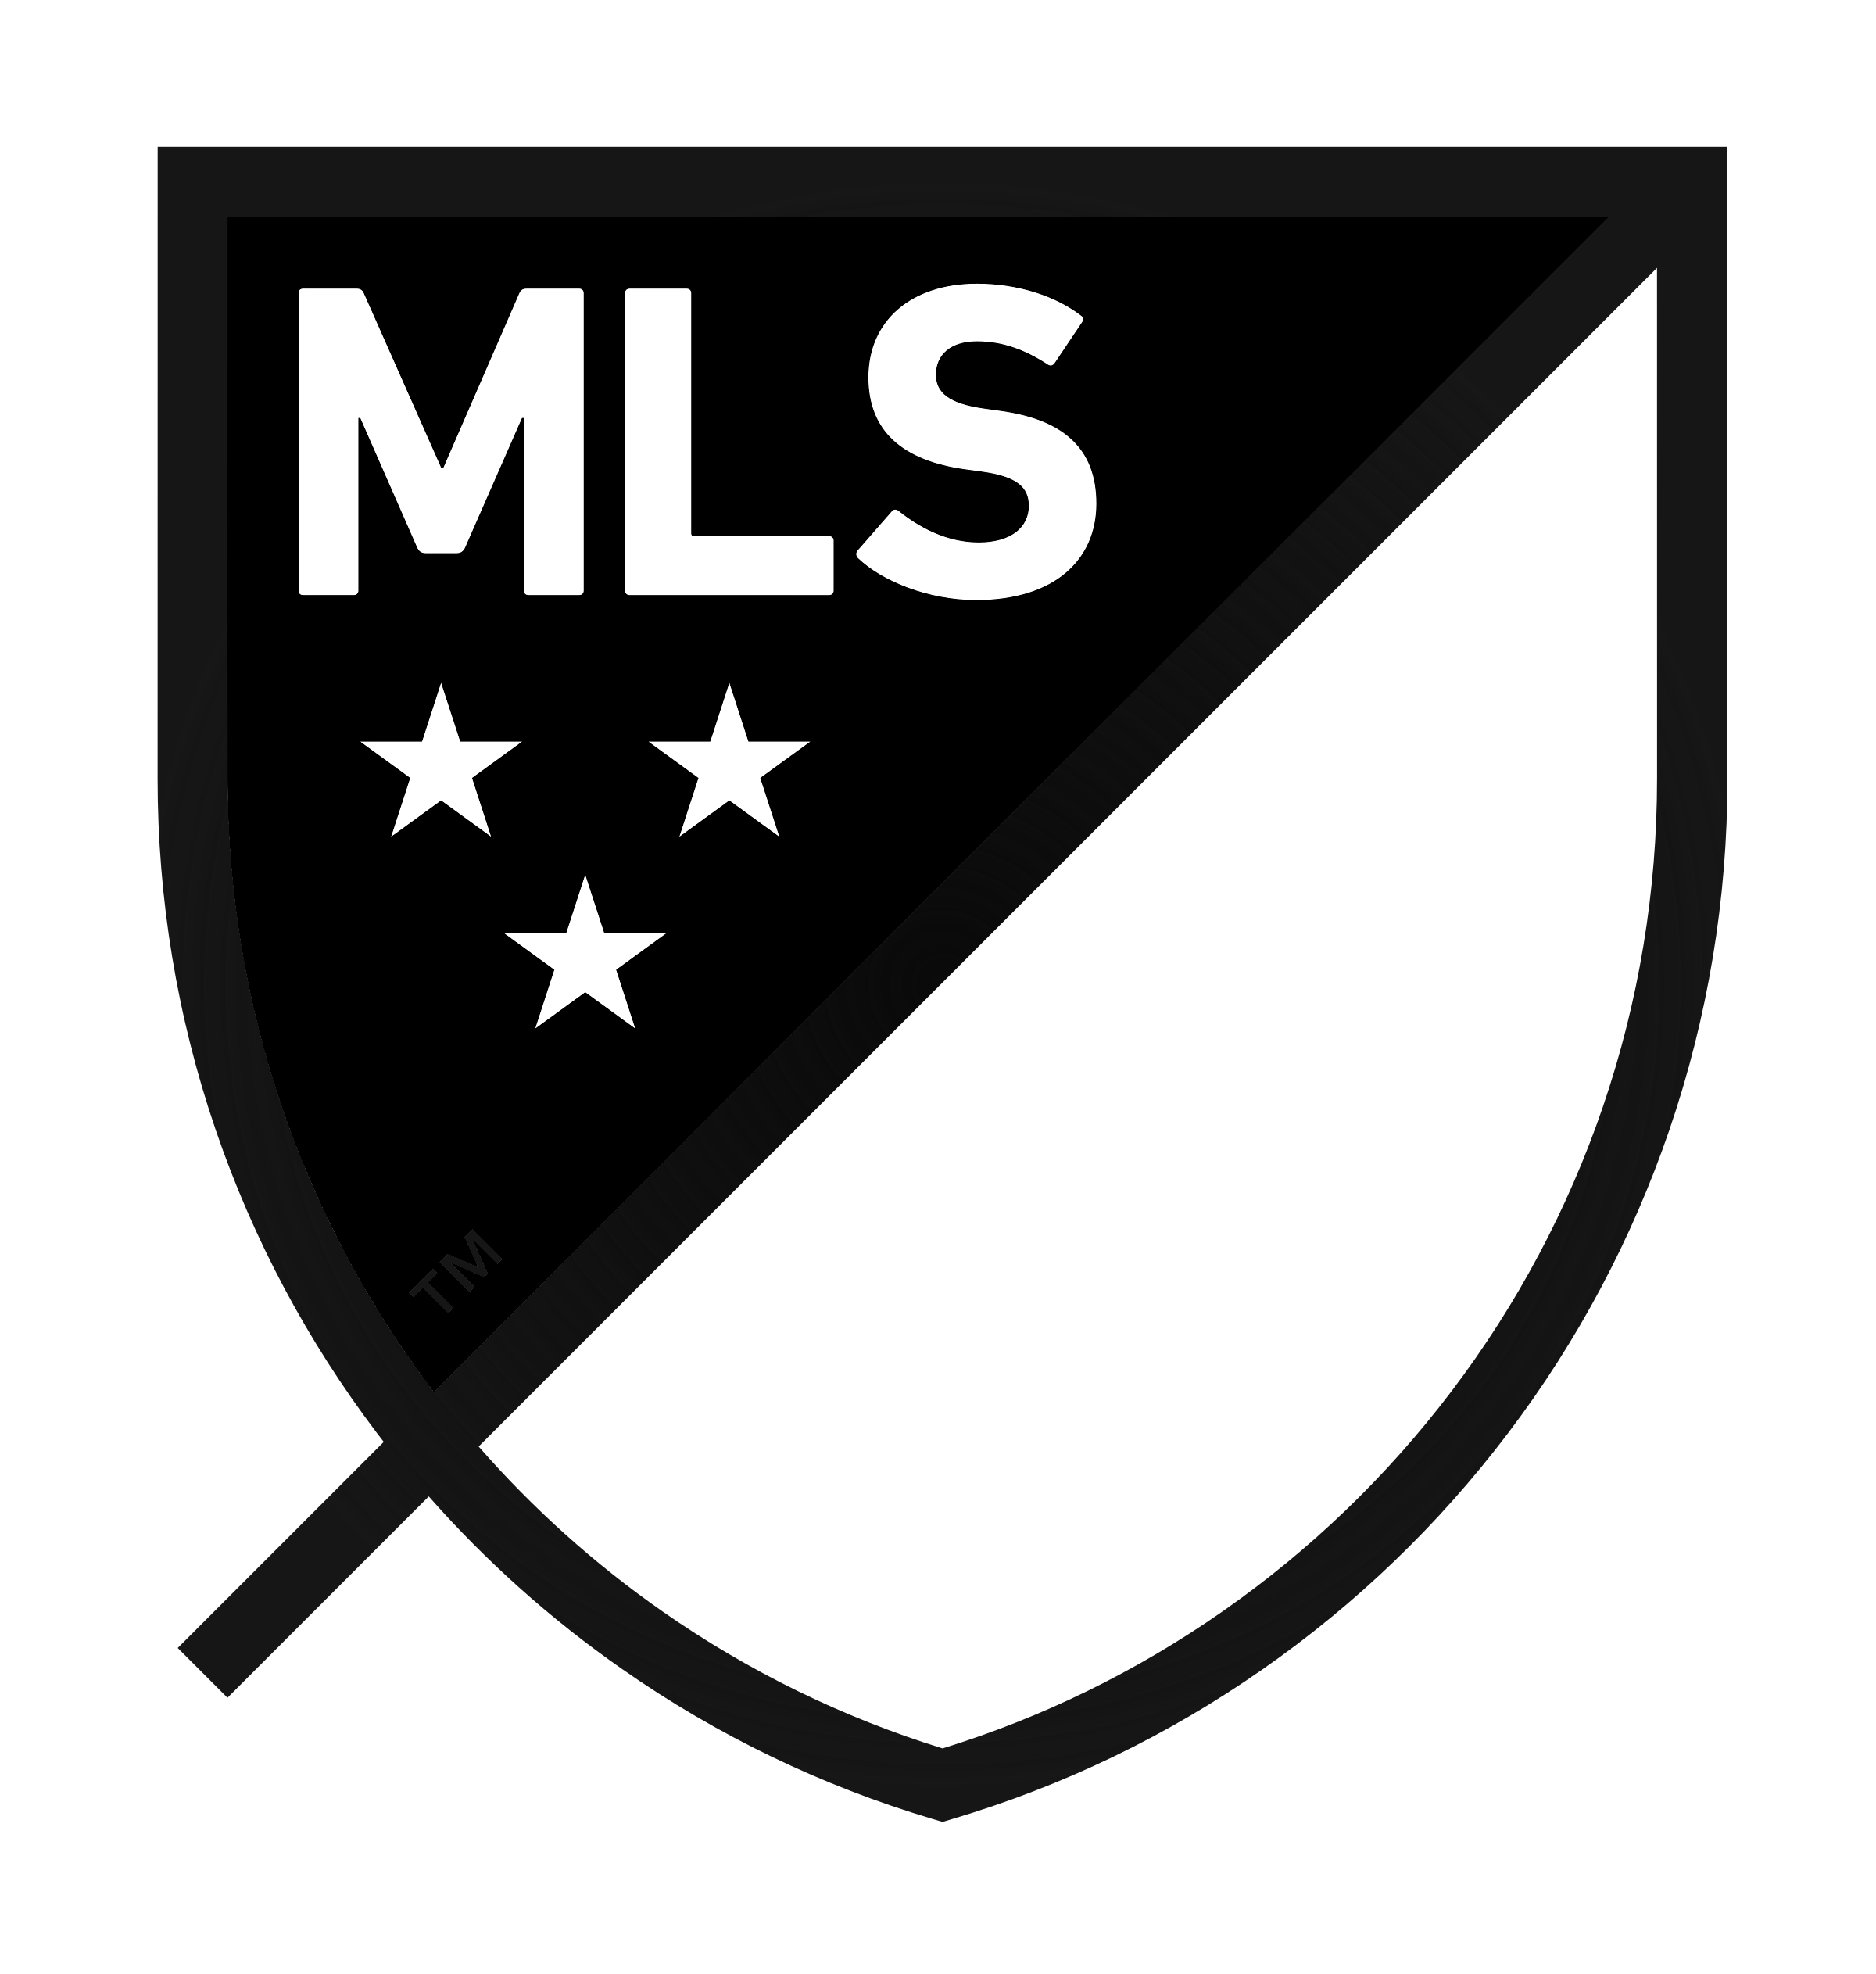 Mls logo black and white 1